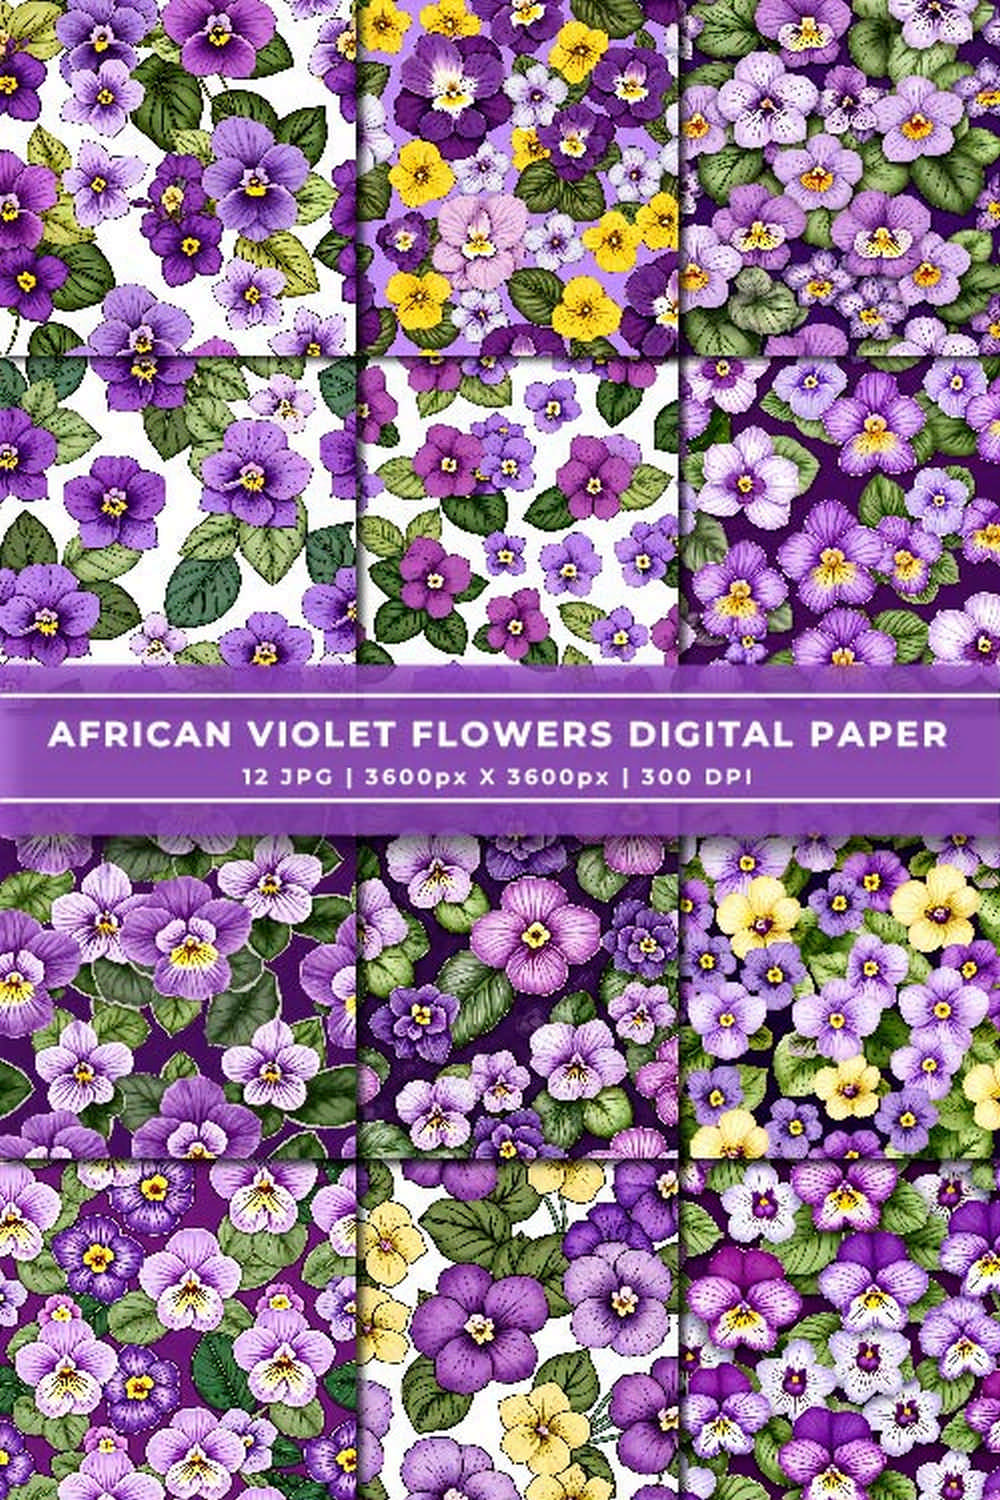 African Violet Flowers Digital Paper pinterest preview image.